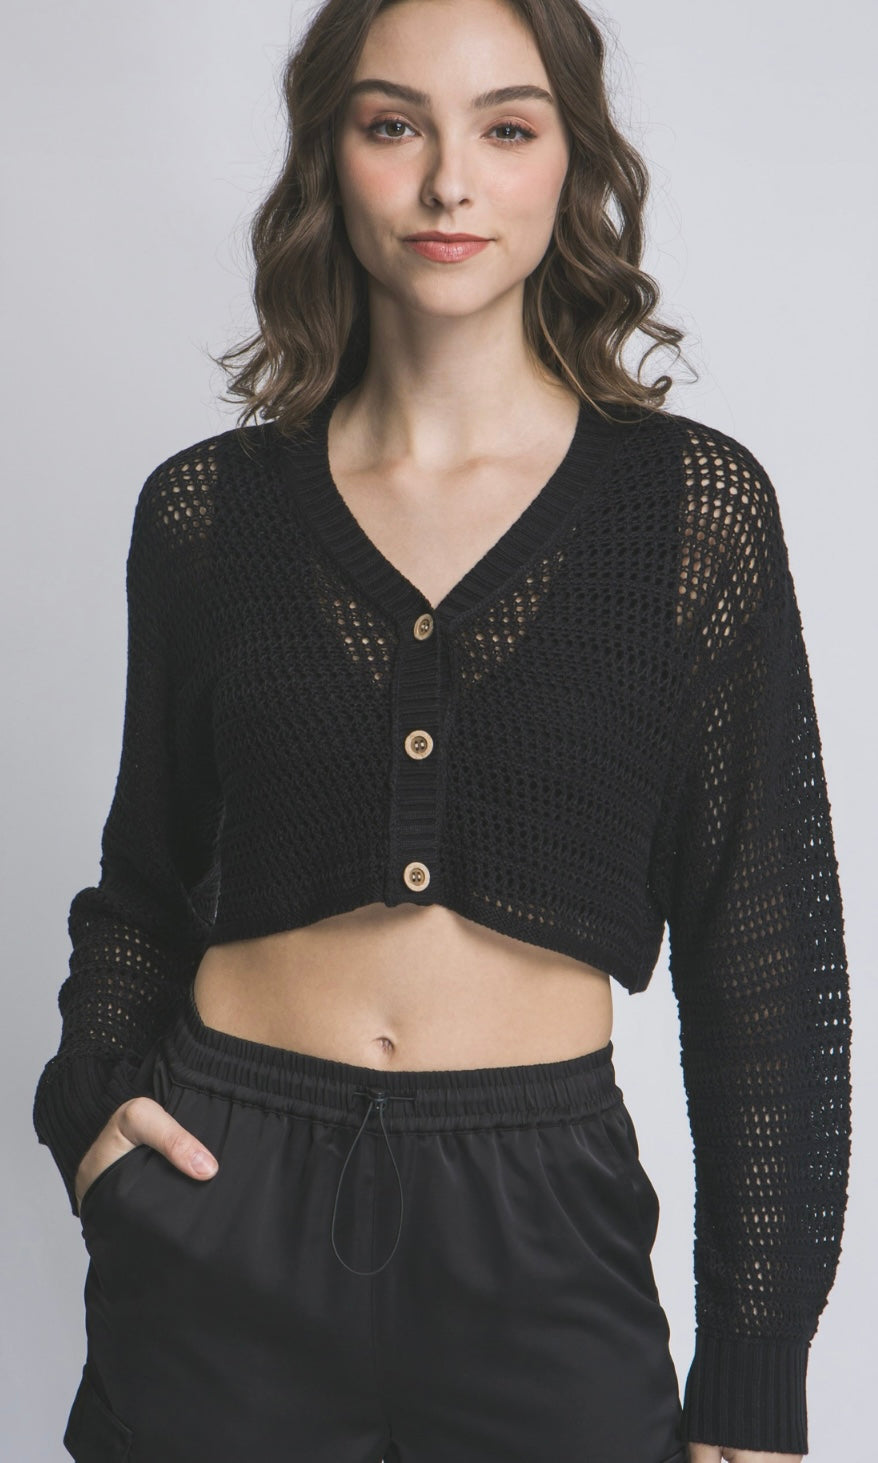 Apollo Black Crochet Crop Cardigan Sweater Top